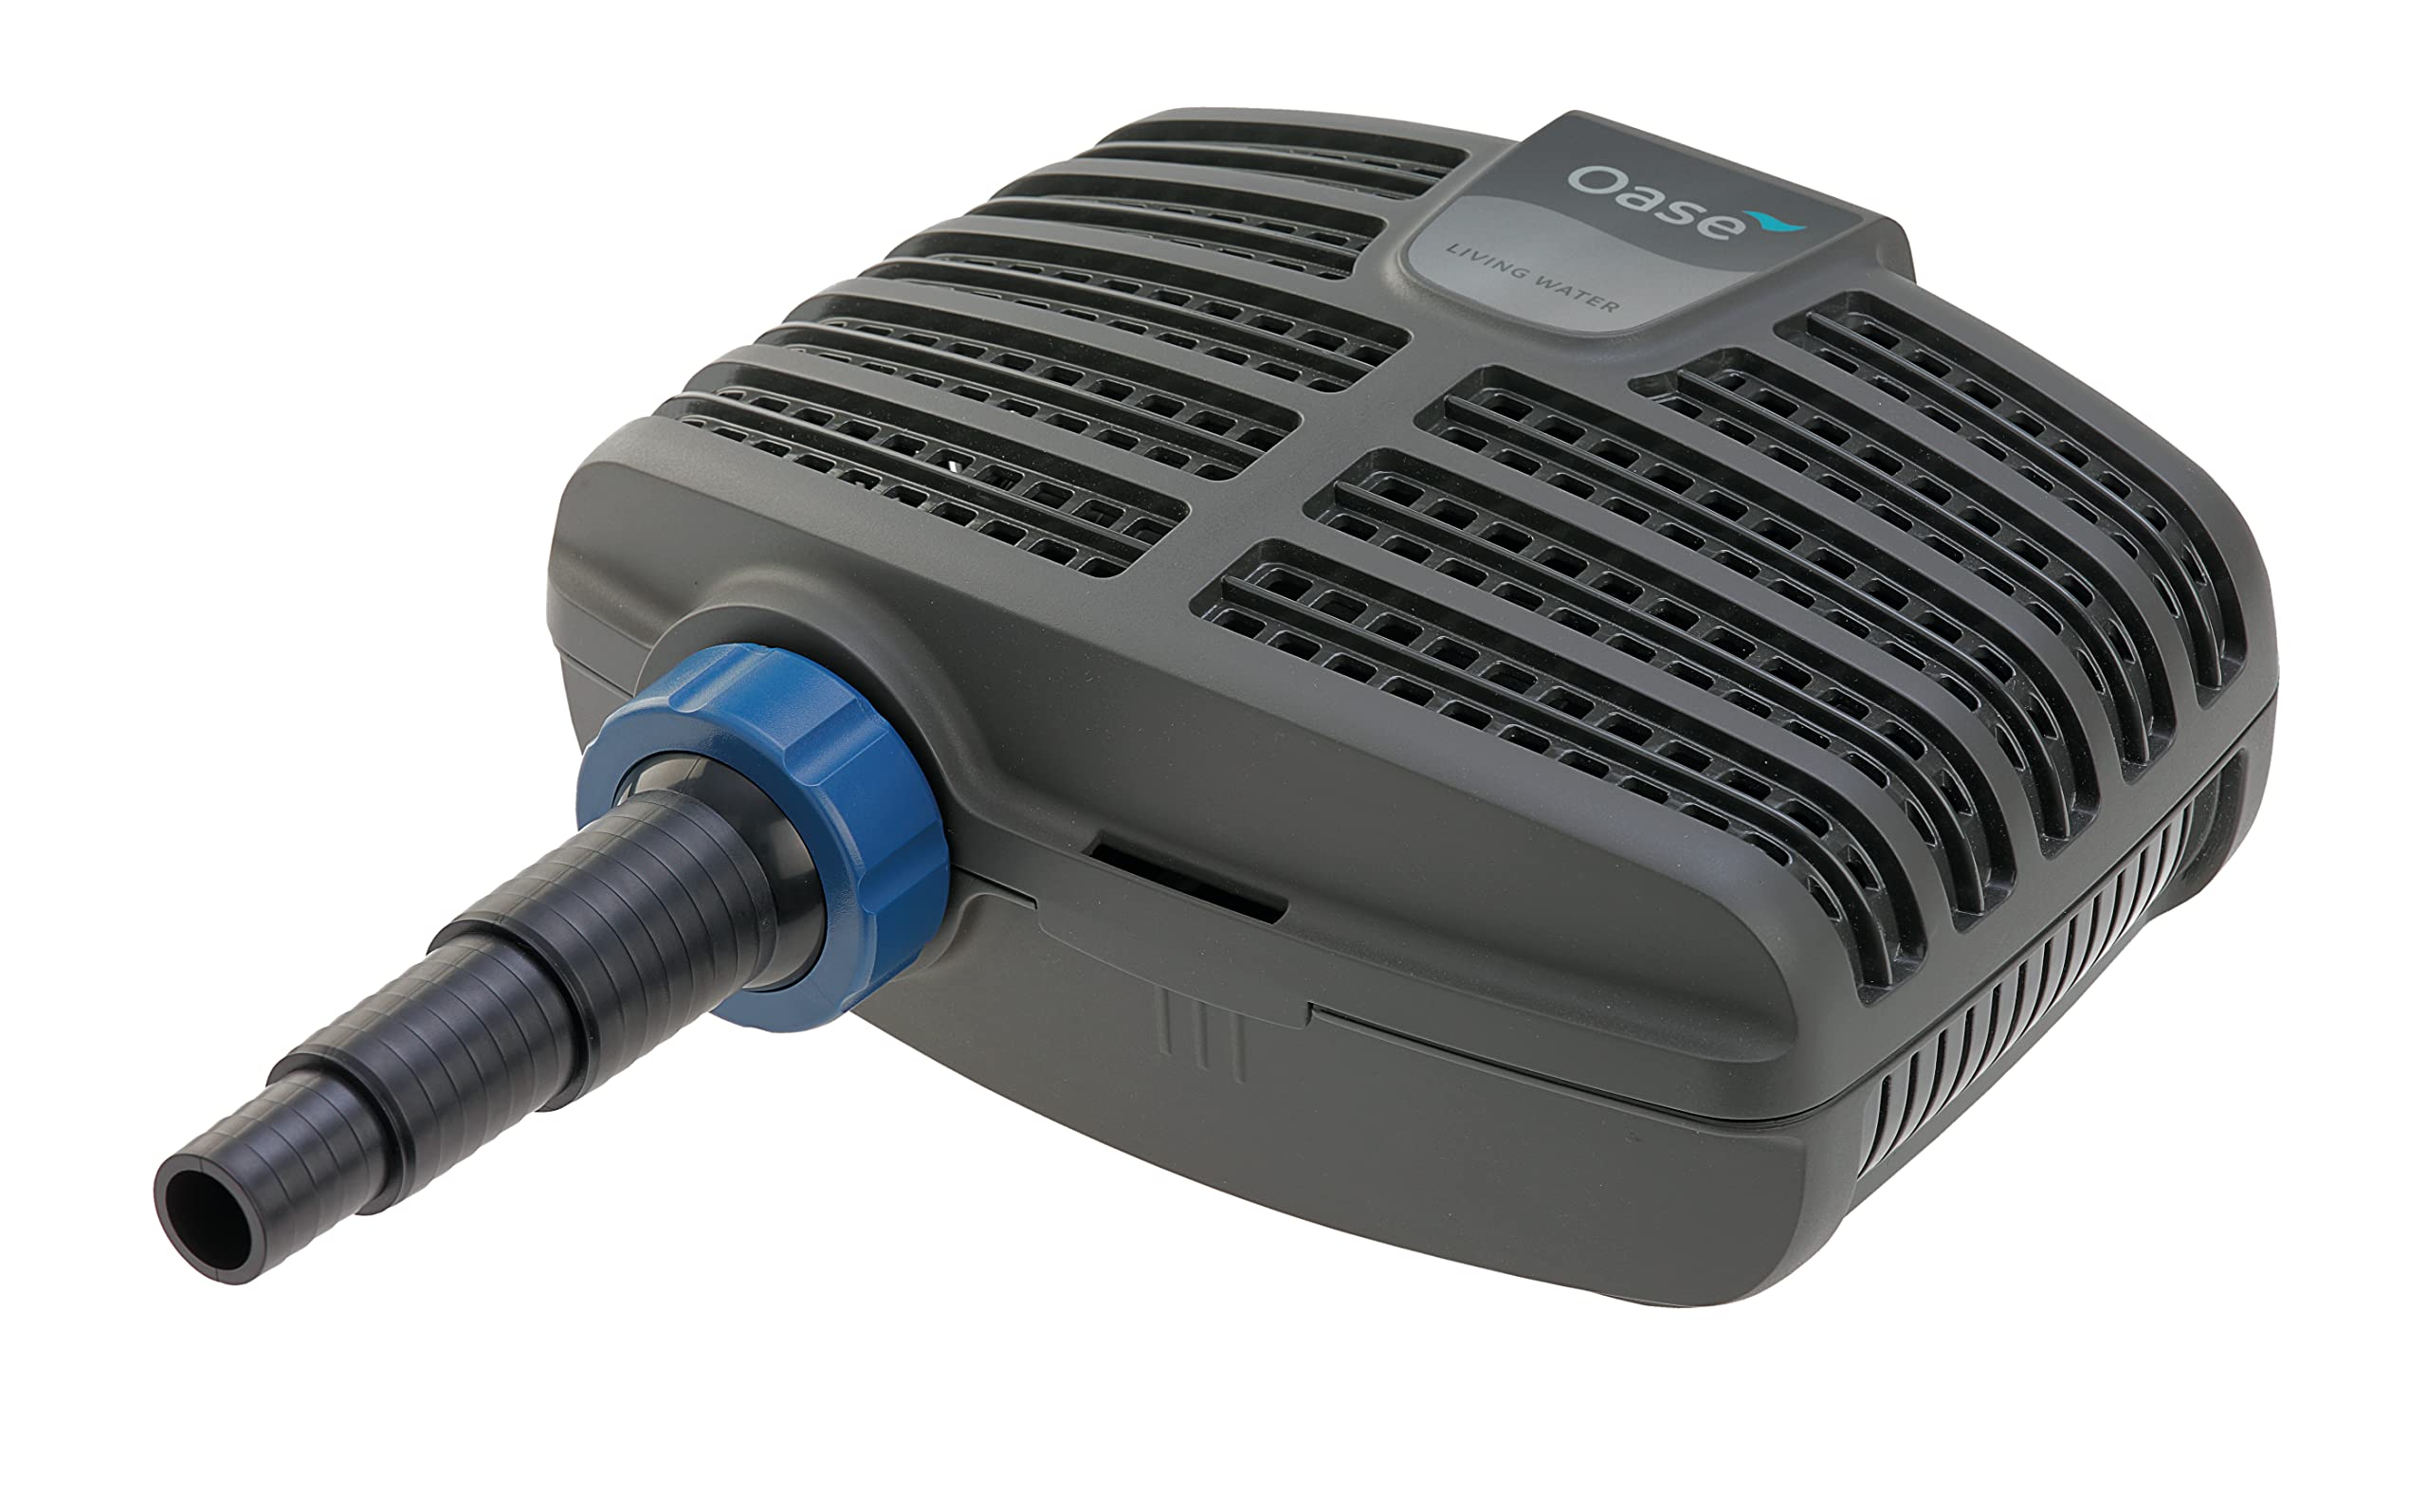 OASE 51096 Filter und Bachlaufpumpe AquaMax Eco Classic 5500, 5300 l/h Förderleistung, energiesparende Bachlaufpumpe, Teichpumpe, Filter, Pumpe, Bachlauf